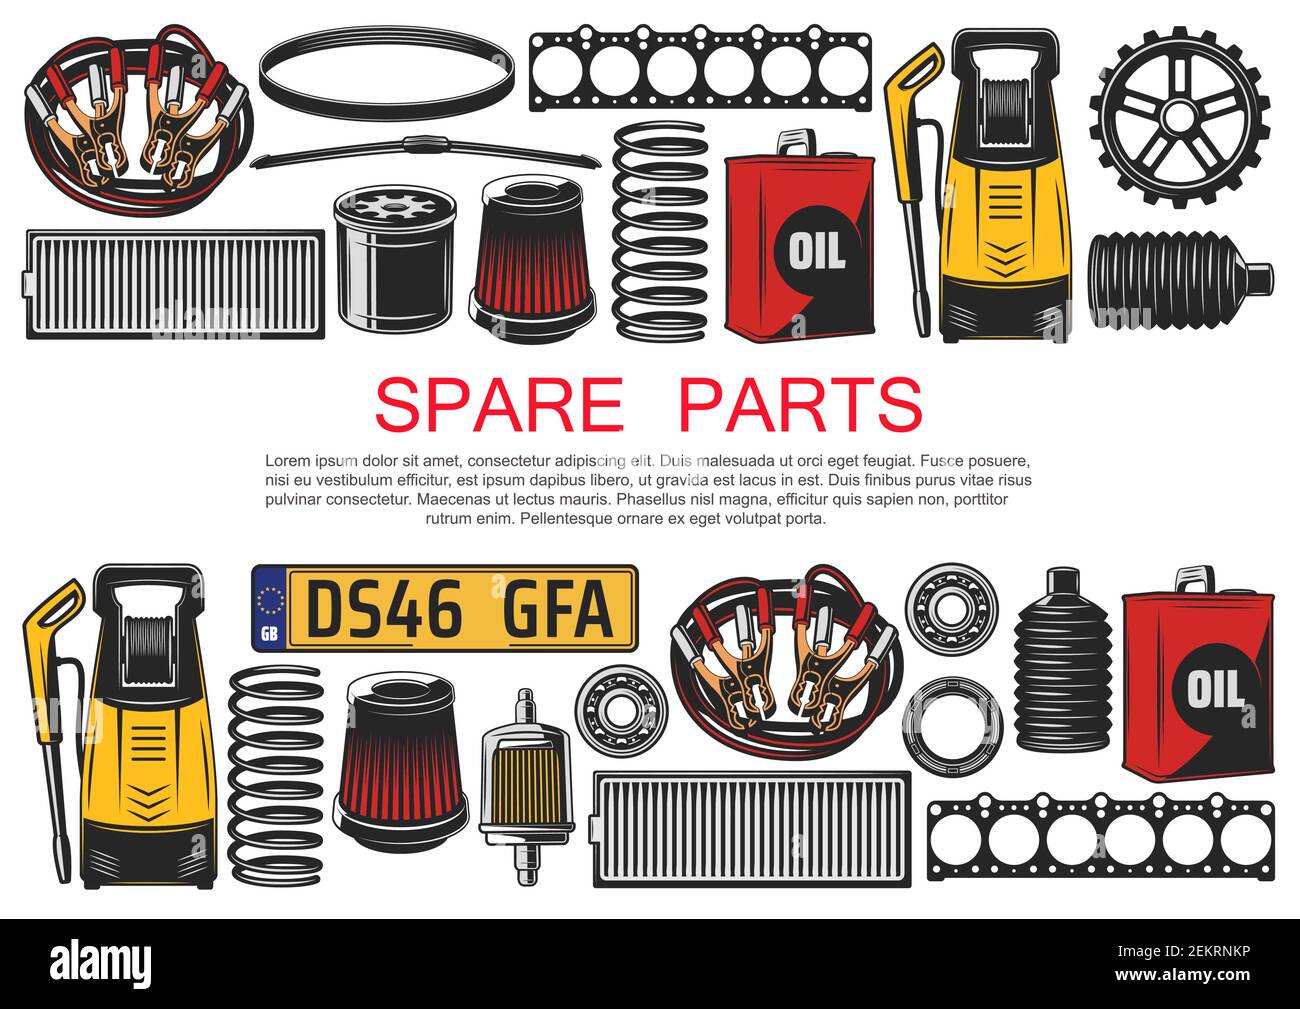 https://c8.alamy.com/comp/2EKRNKP/spare-parts-car-accessories-vector-high-pressure-cleaner-air-filter-and-vehicle-number-plate-motor-oil-engine-belt-wiper-blade-and-start-battery-2EKRNKP.jpg